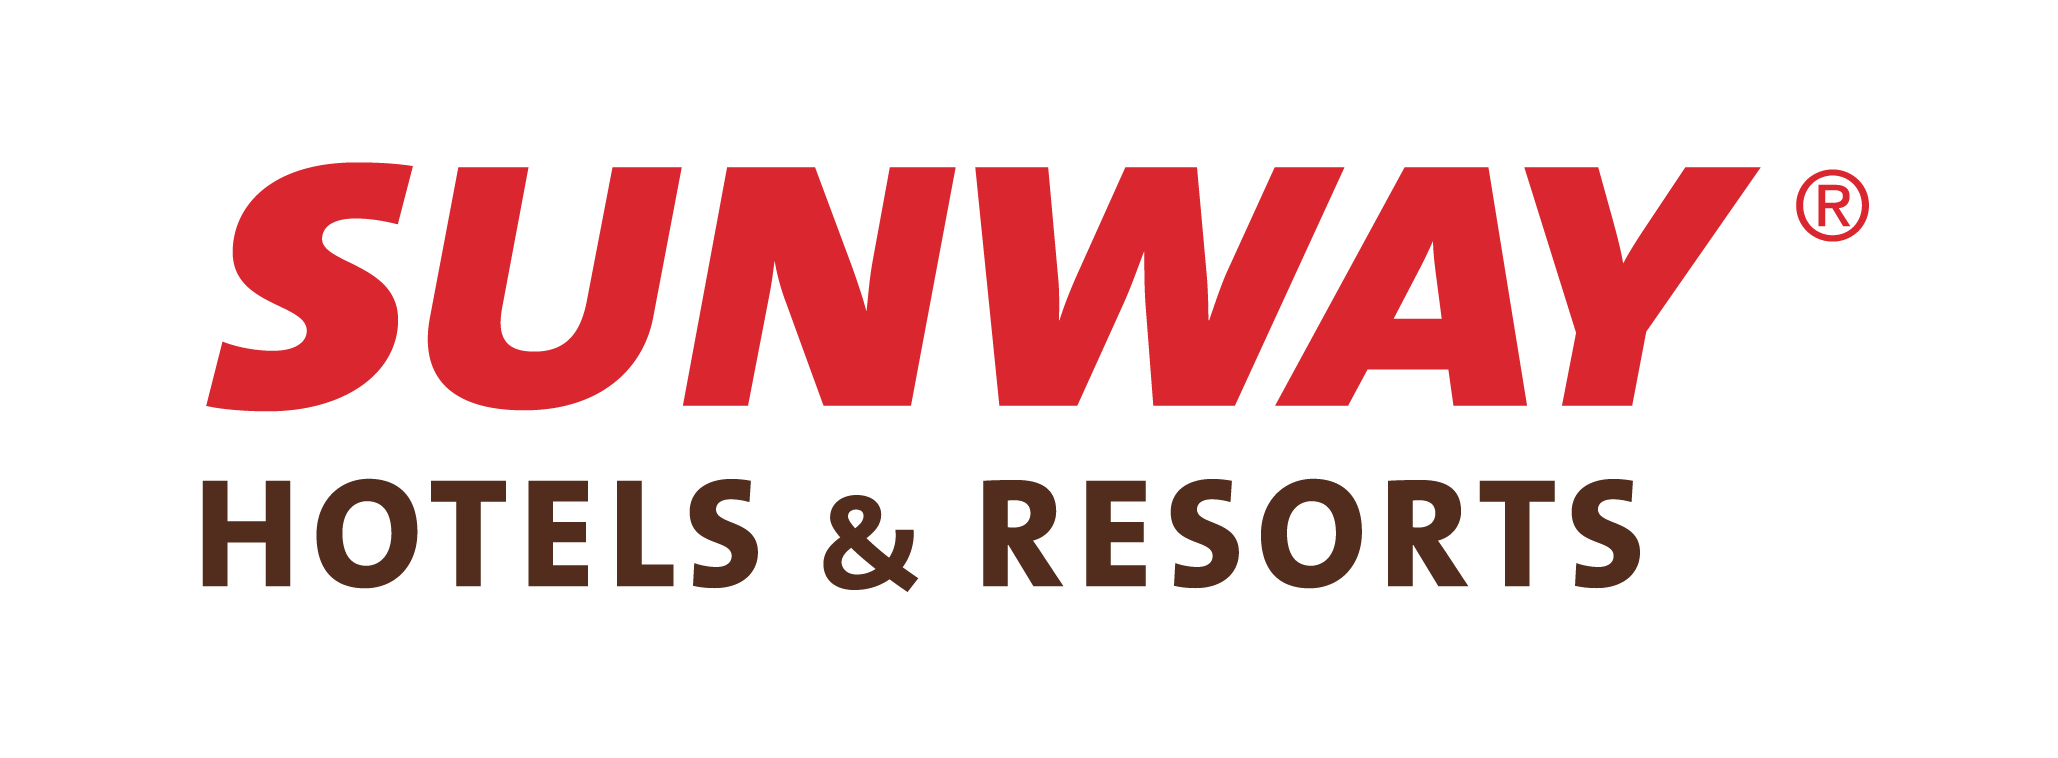 Hotels and Resorts Logo - Sunway Hotels & Resorts | Family Hotels, Resort Hotels